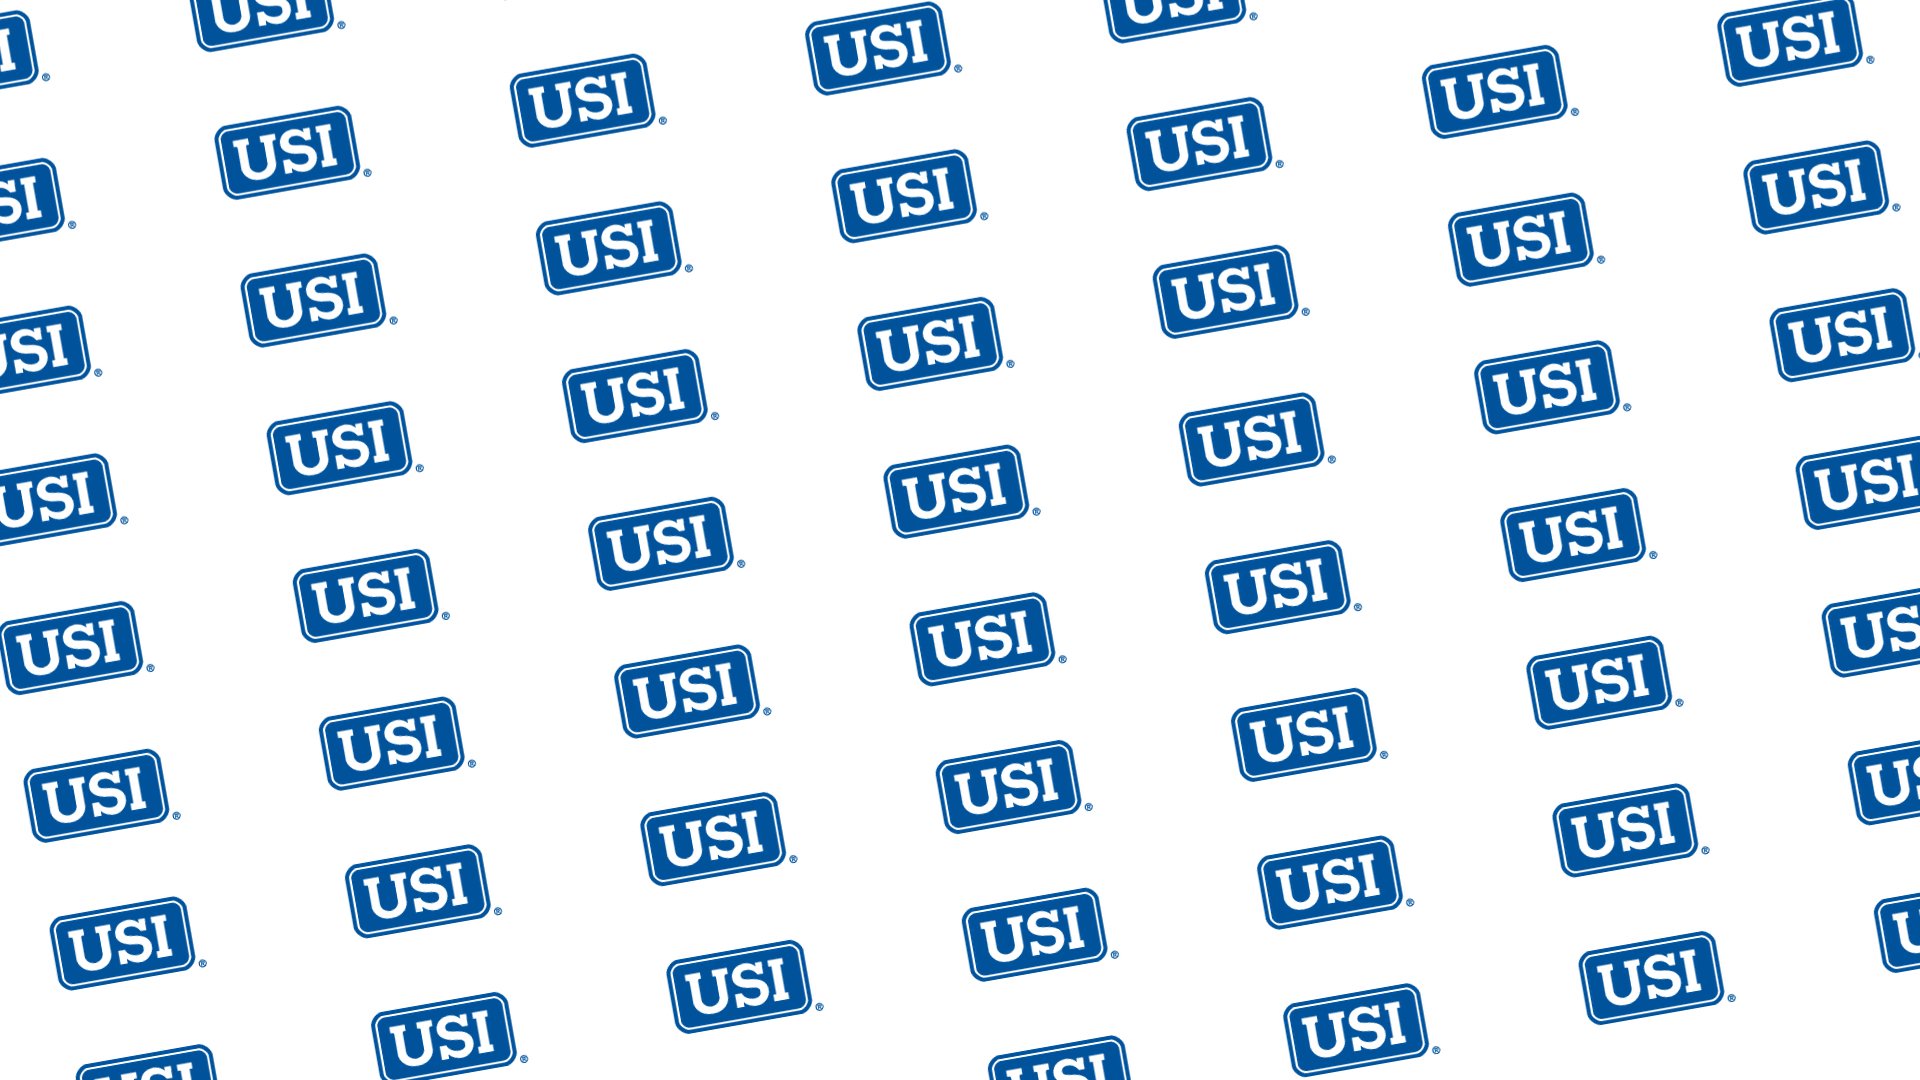 The USI backstitch Partnership Portal